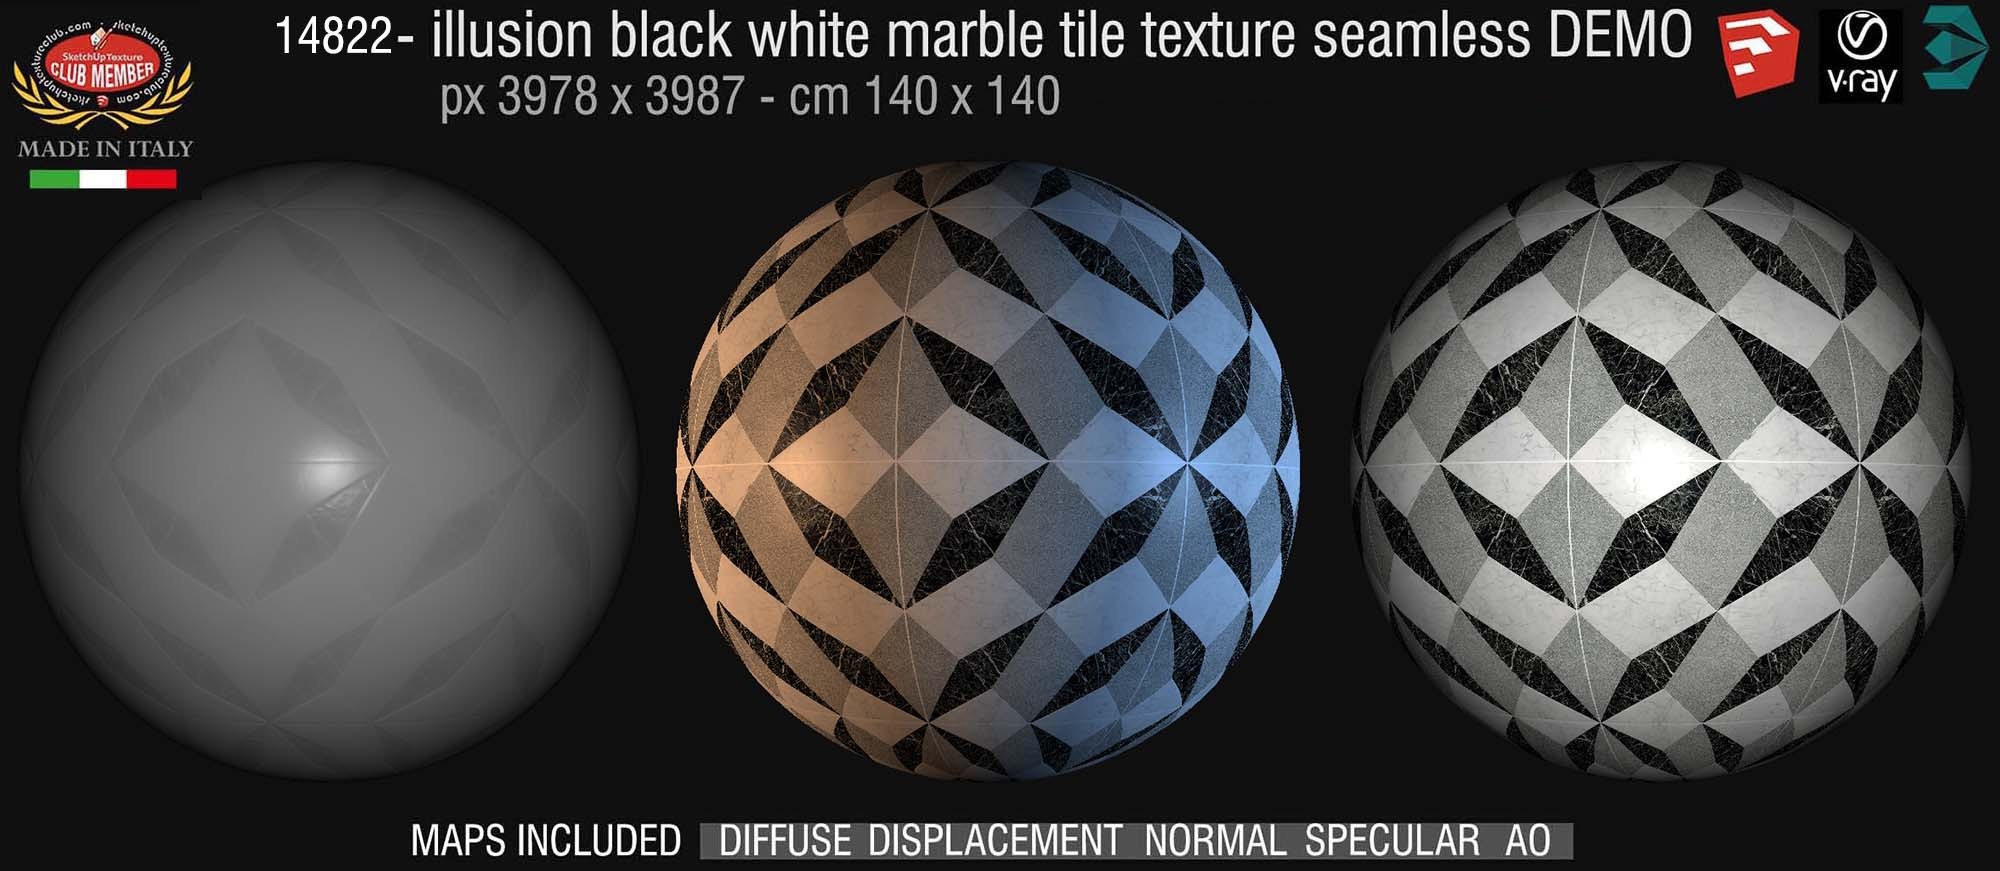 14822 Illusion black white marble floor tile texture + maps DEMO